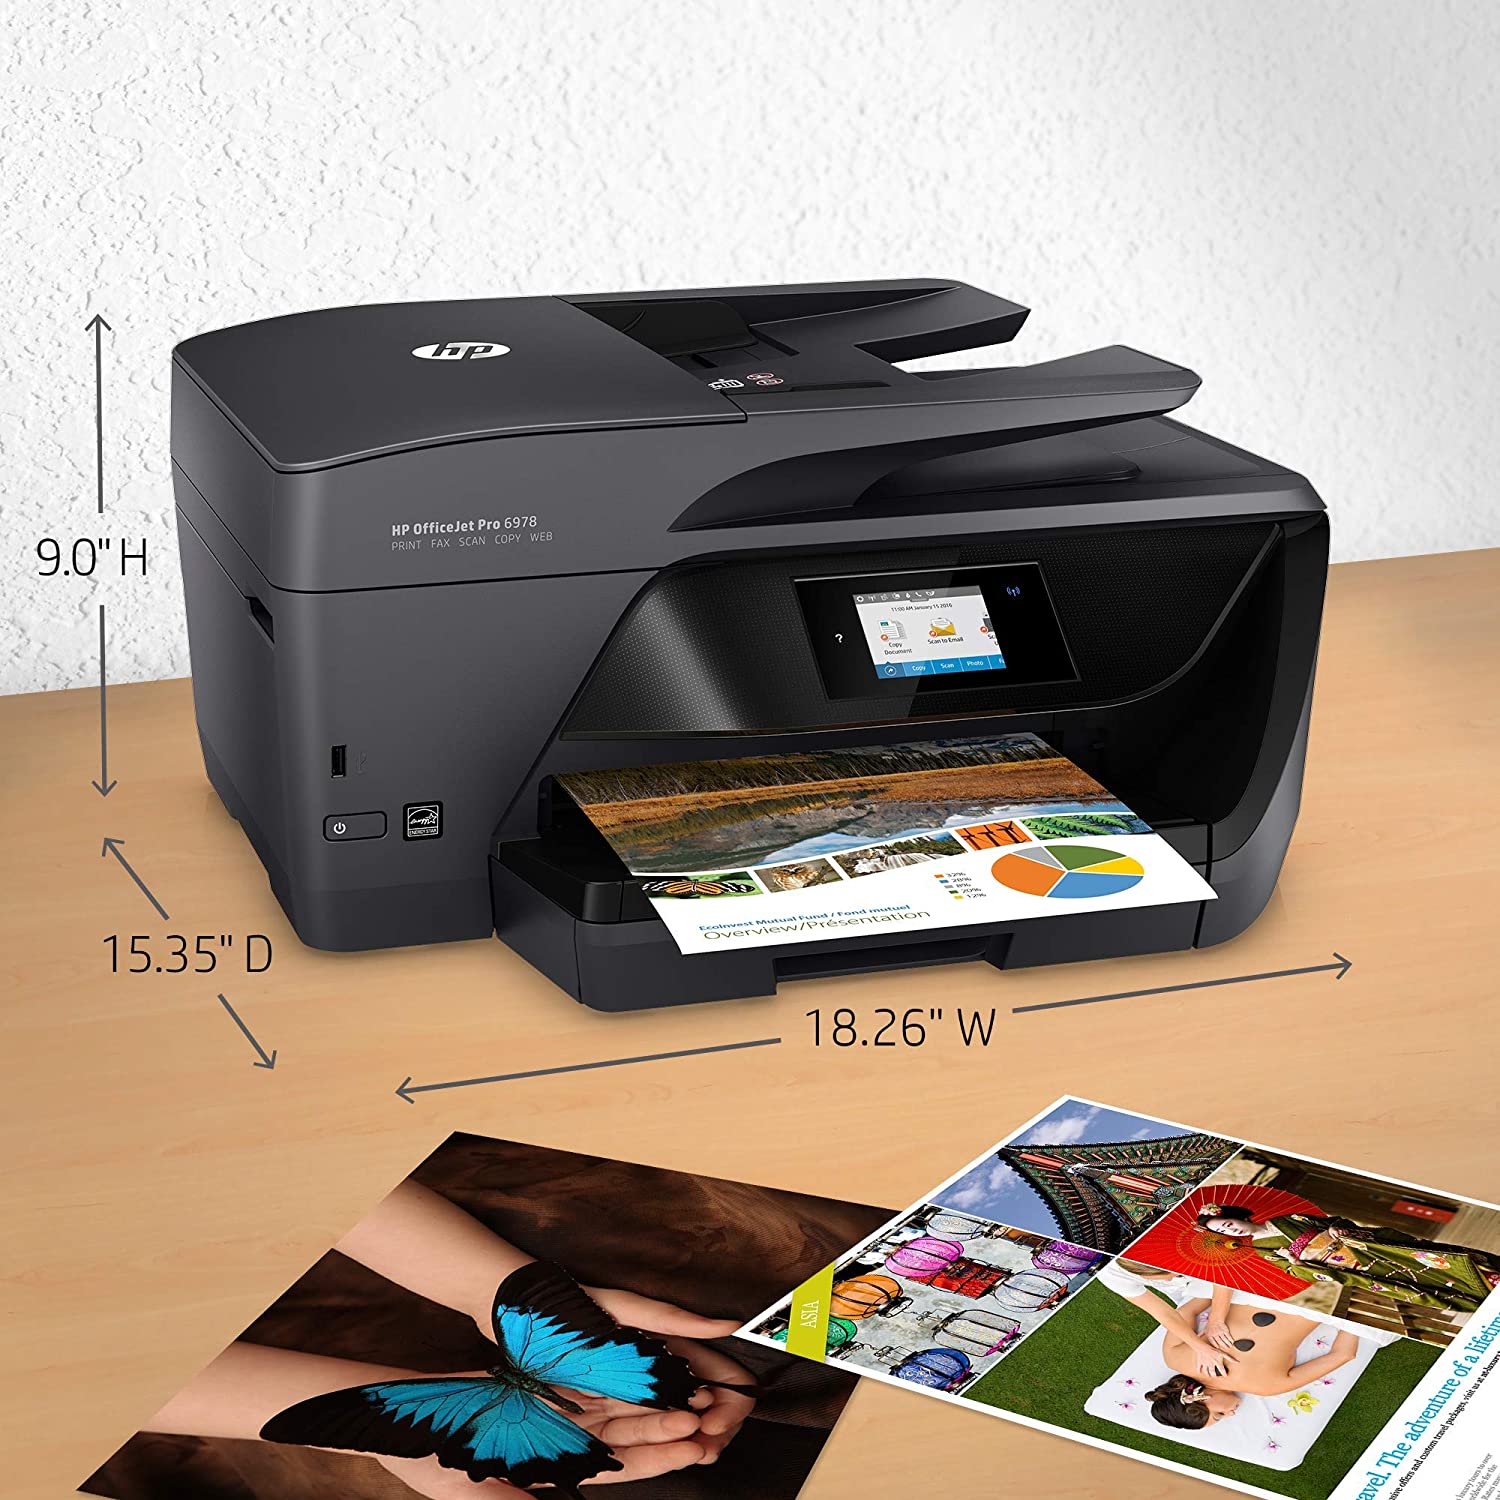 HP Officejet Pro 6978 Wireless Inkjet Multifunction Printer, Color - image 3 of 6